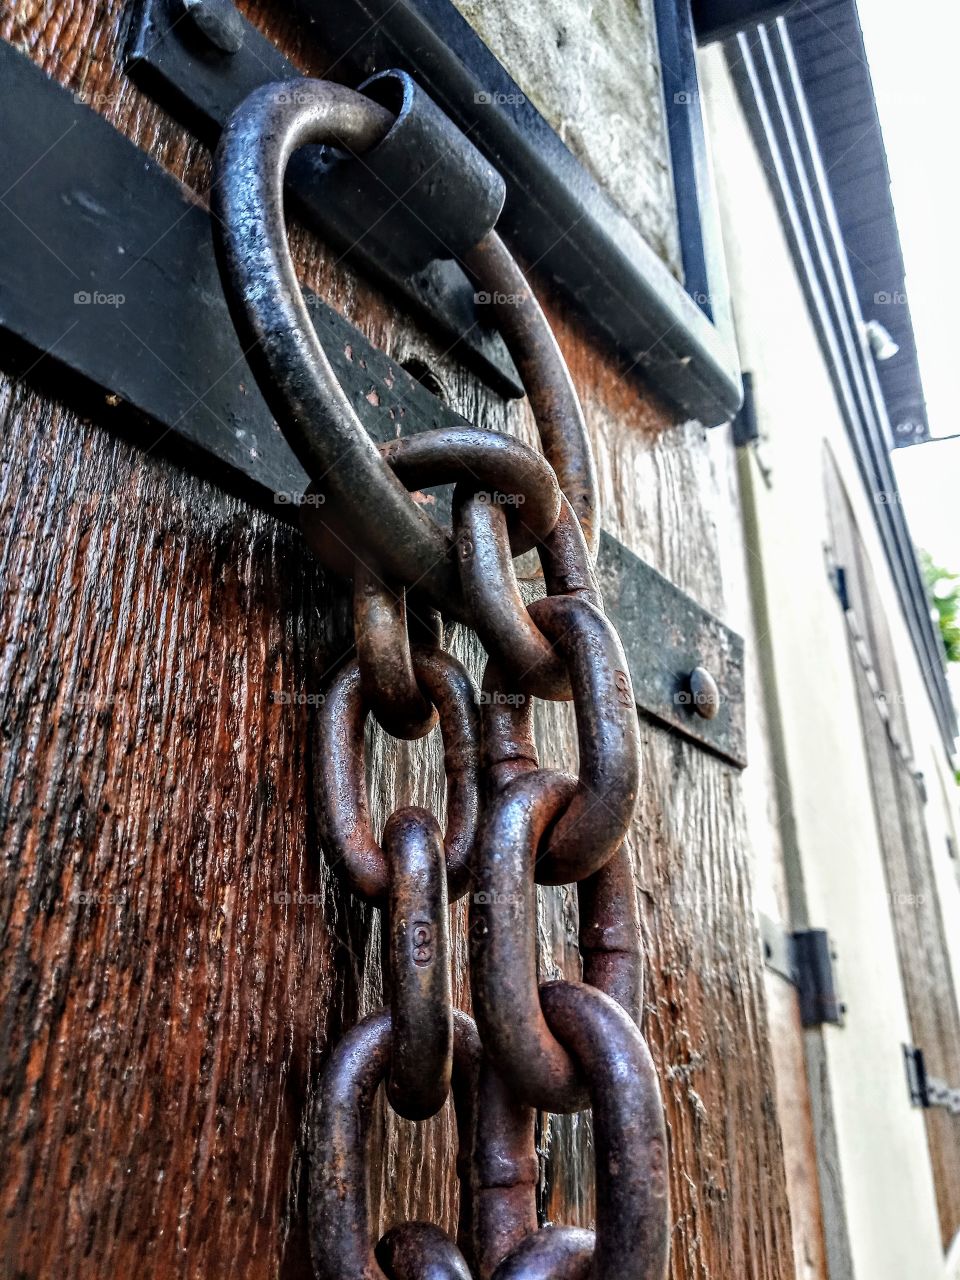 iron chain on old wooden door